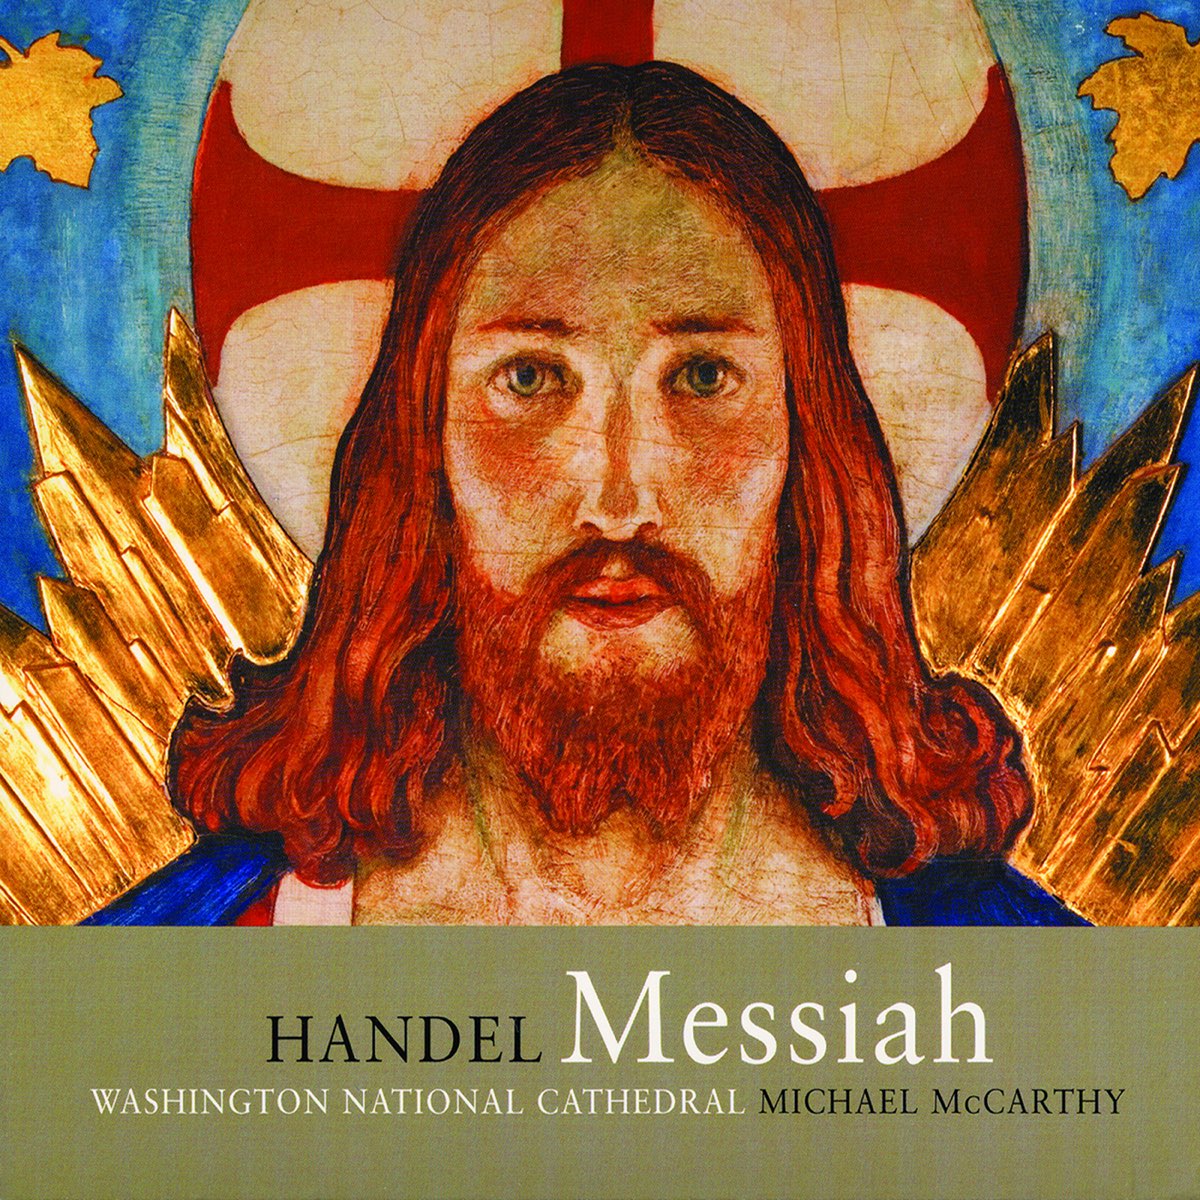 ‎Handel Messiah by Michael McCarthy, Washington National Cathedral